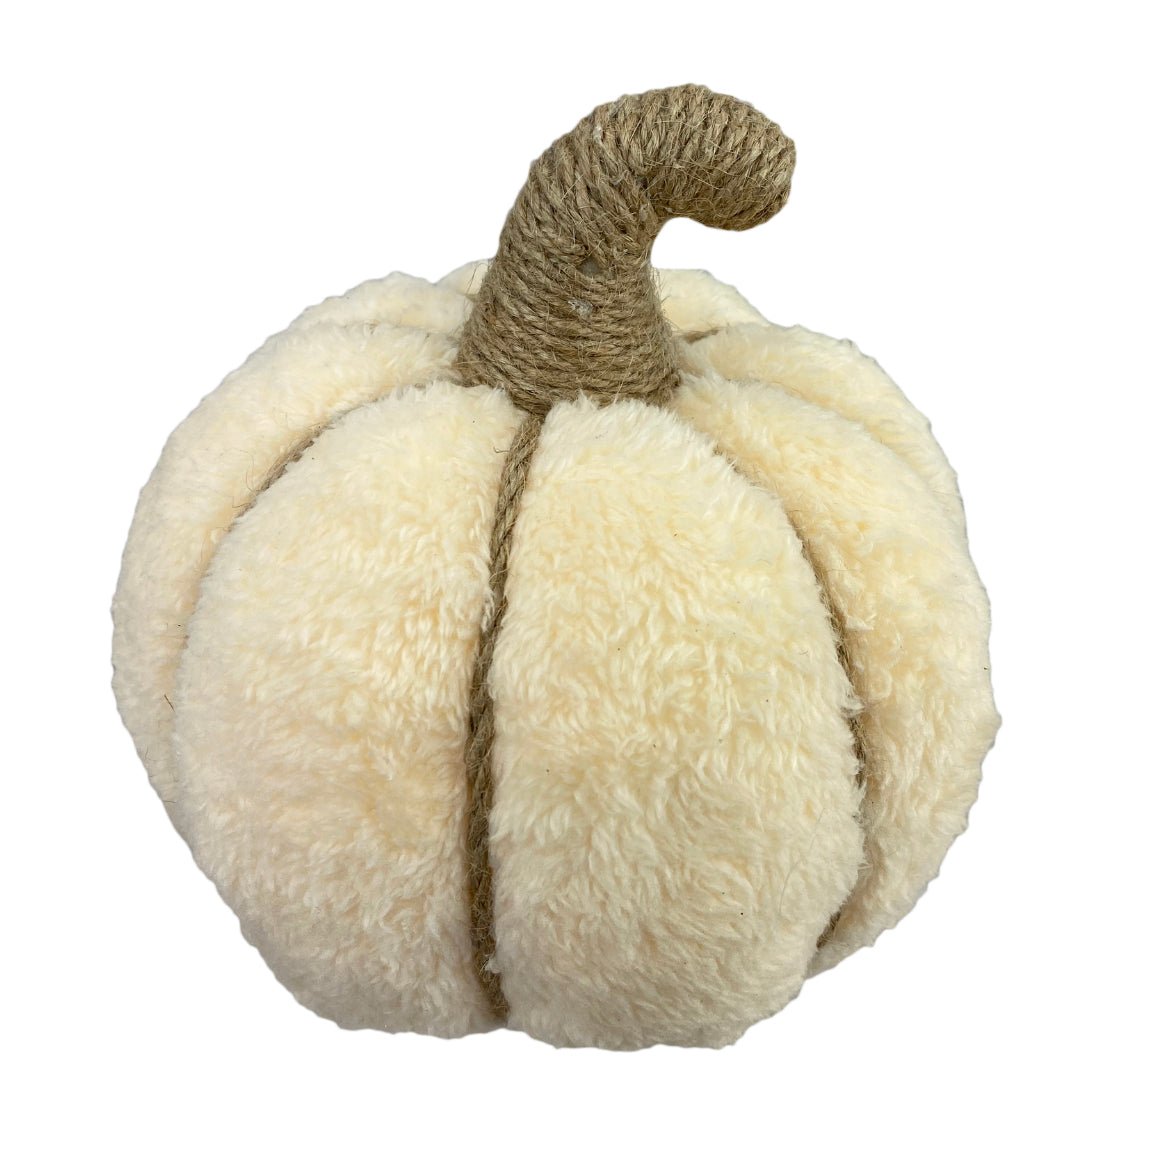 Faux fur pumpkin - cream - Greenery MarketSeasonal & Holiday Decorations56934CM